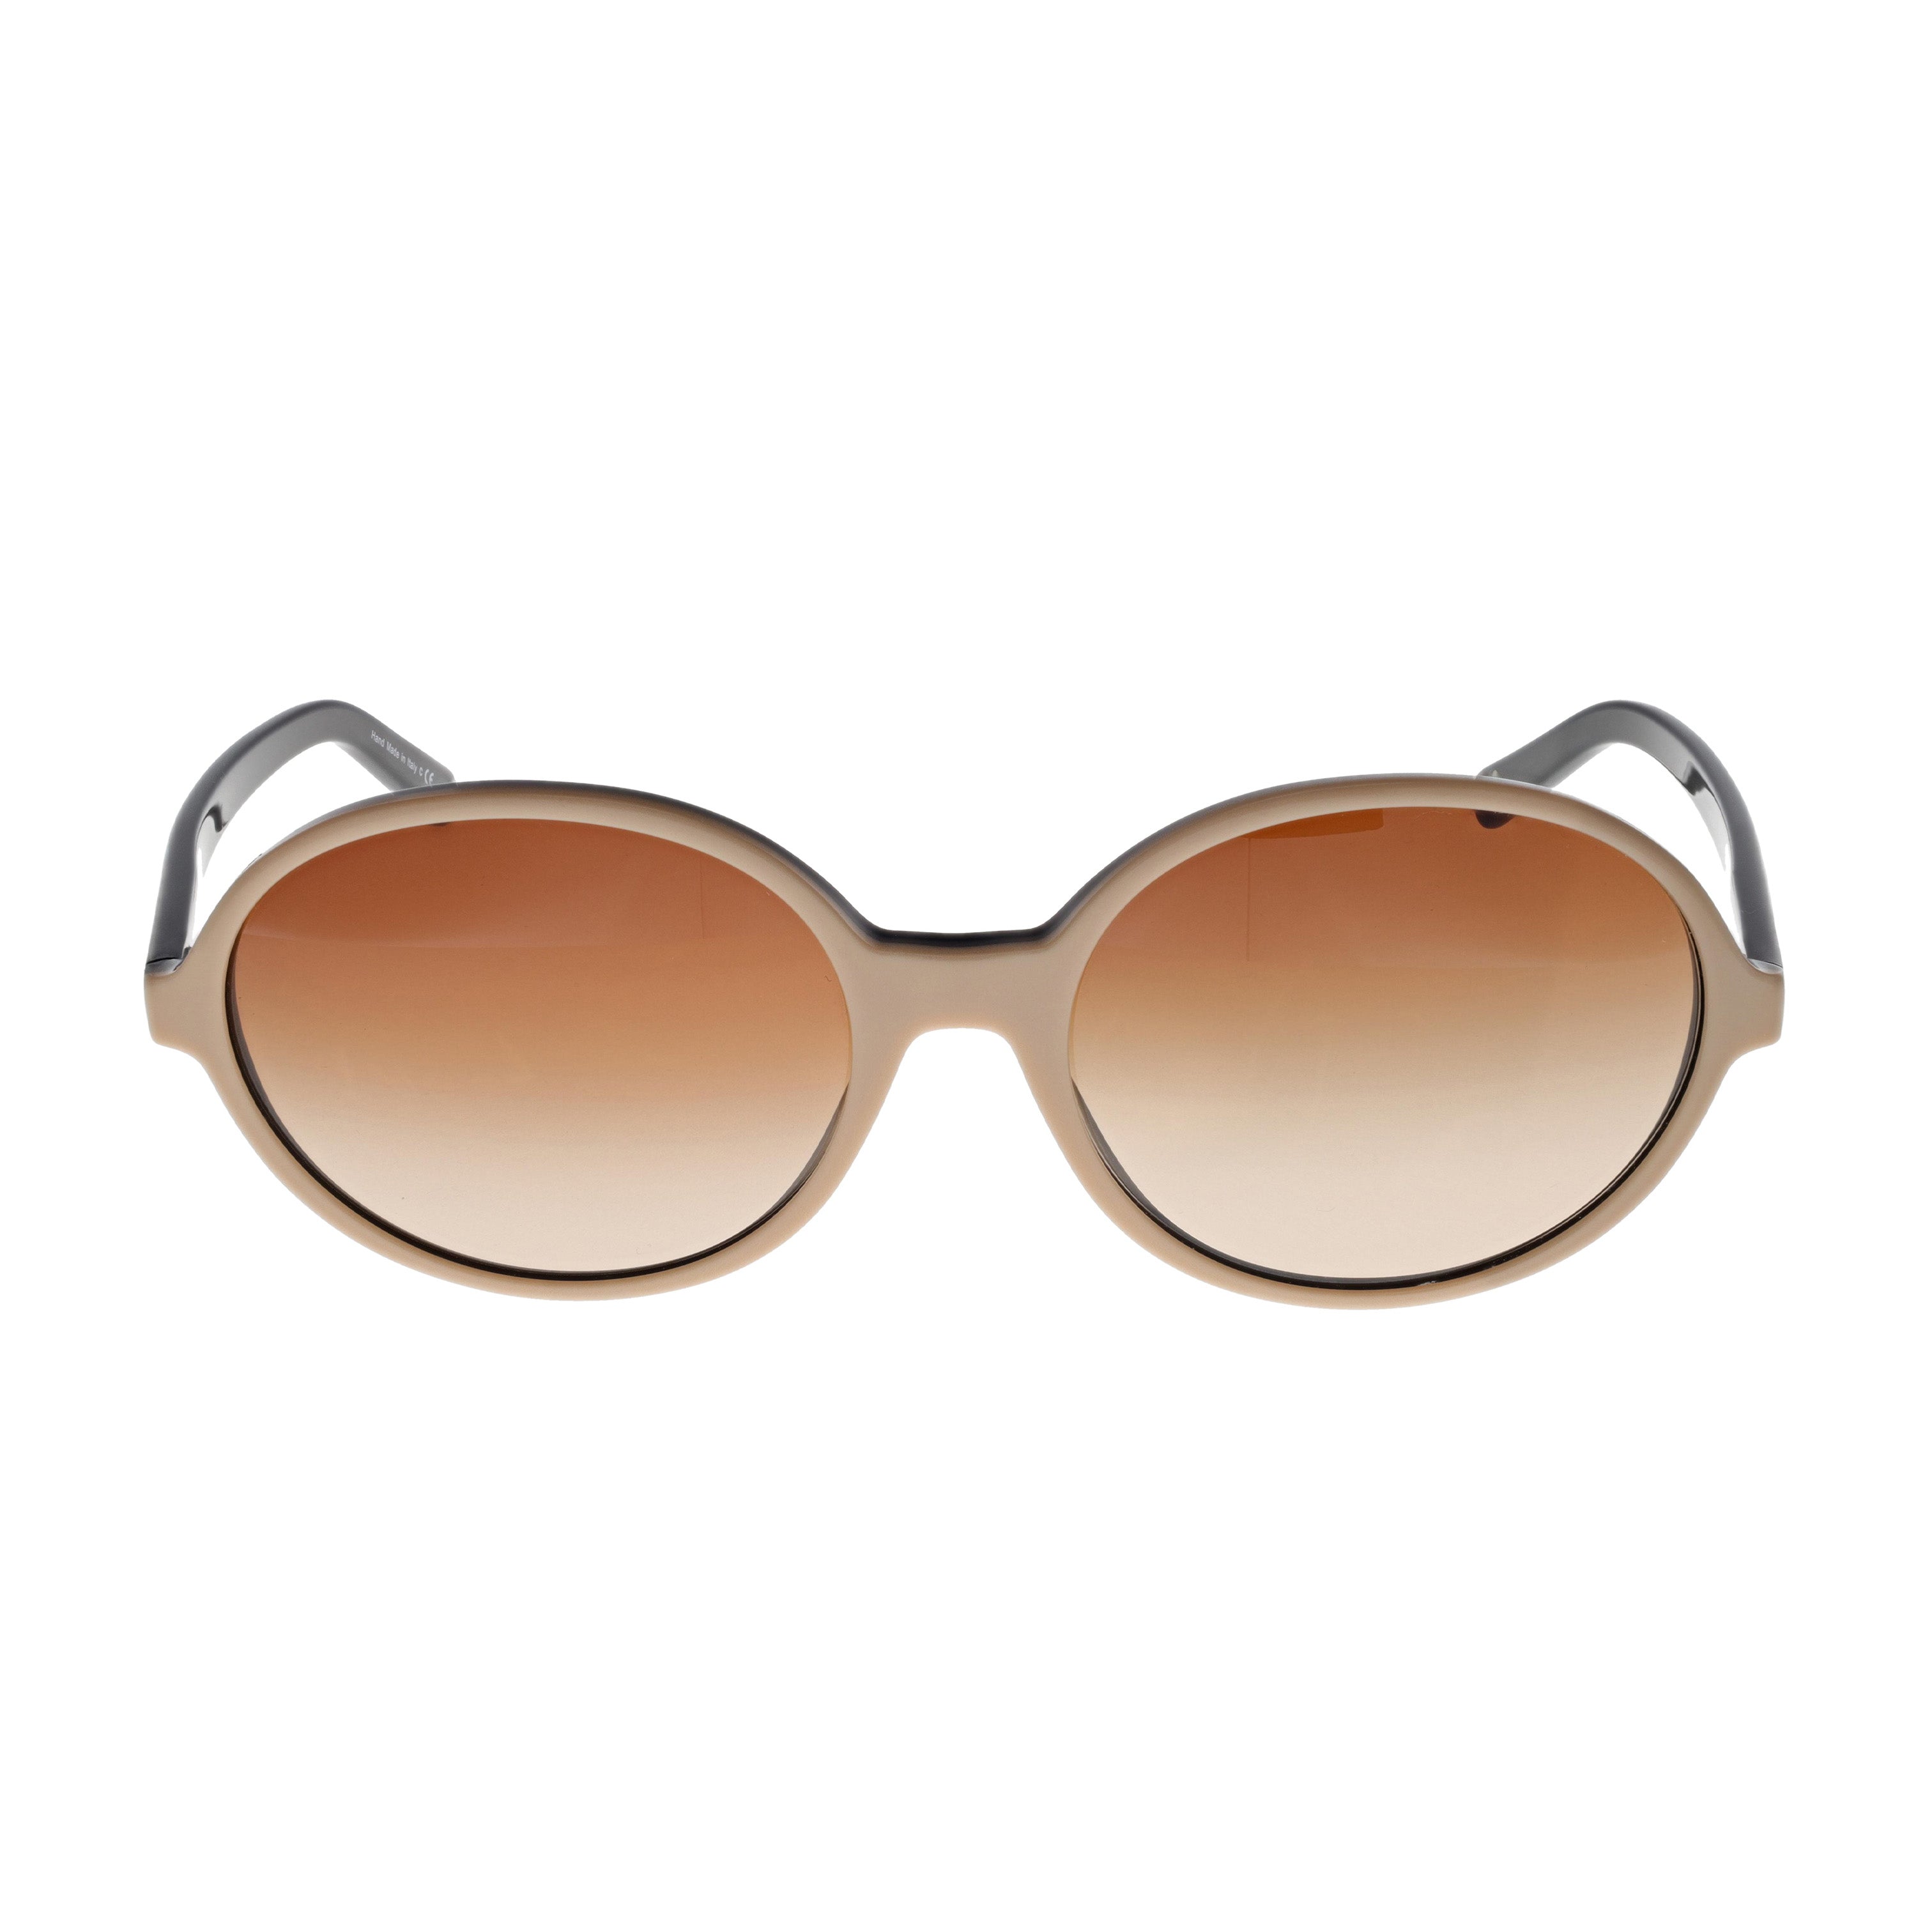 Paul Smith Elodie Sunglasses - PM8084S